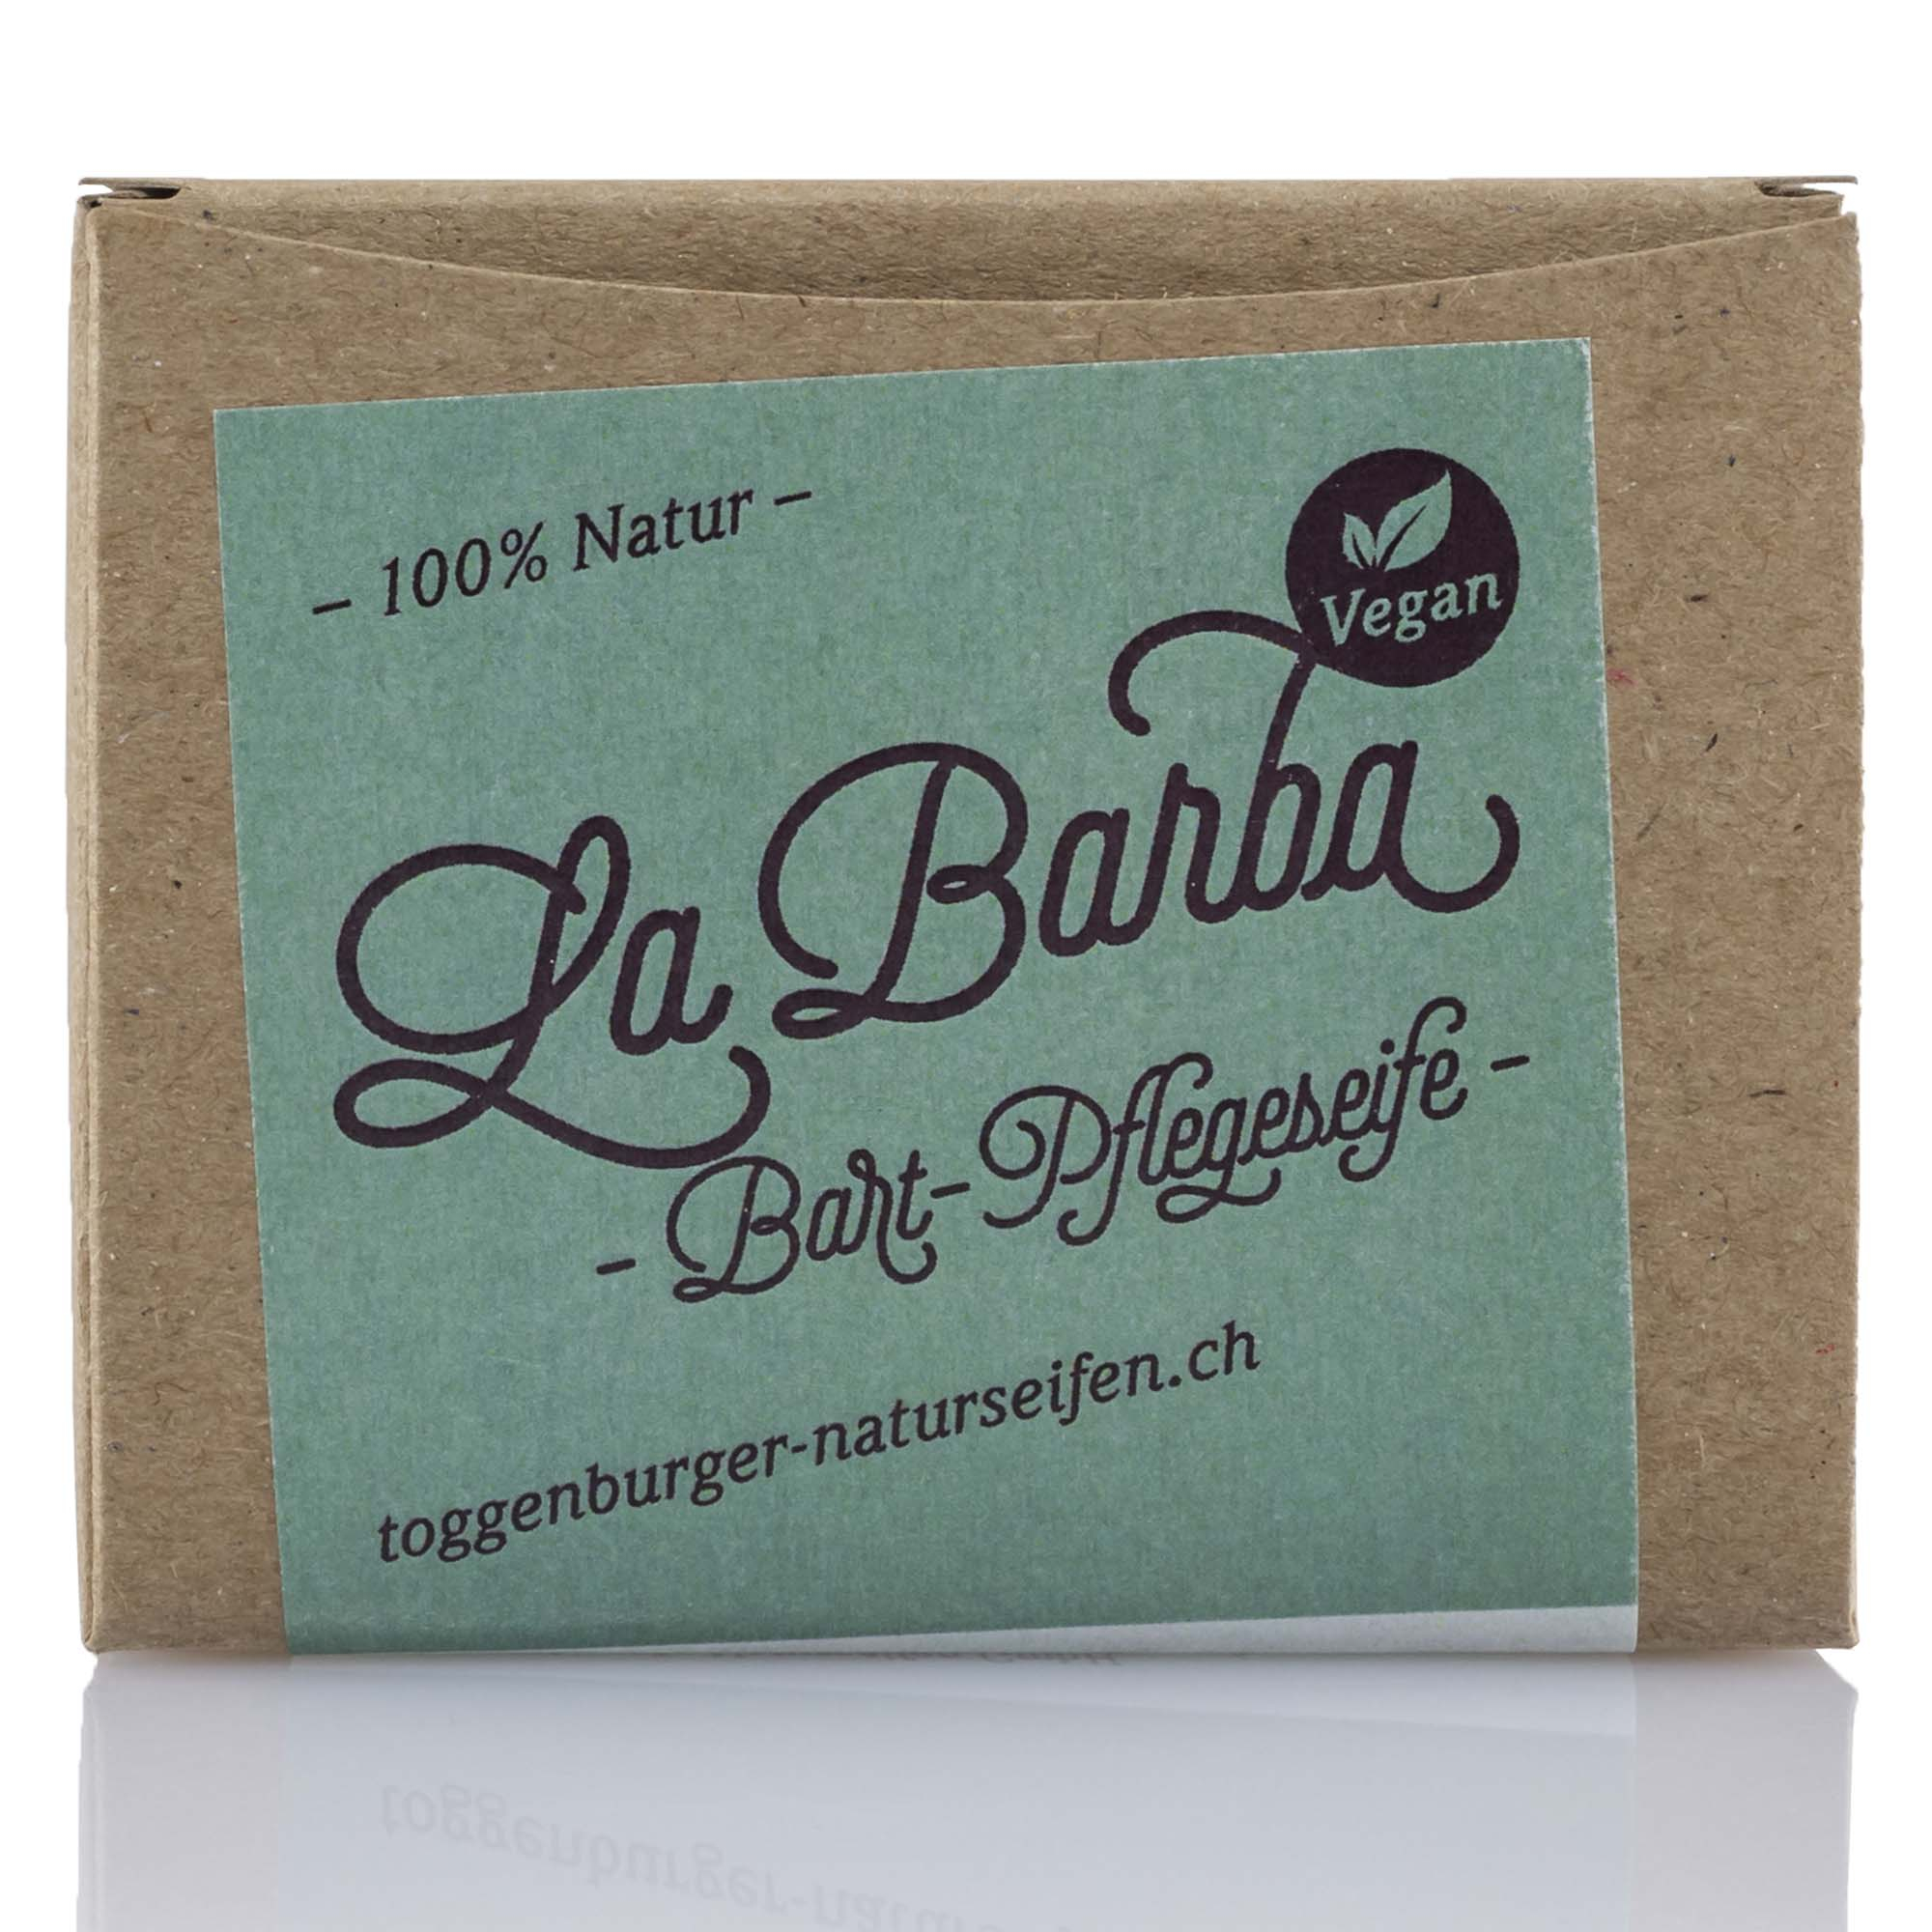 Vegane Bart-Pflegeseife "La Barba", 100g